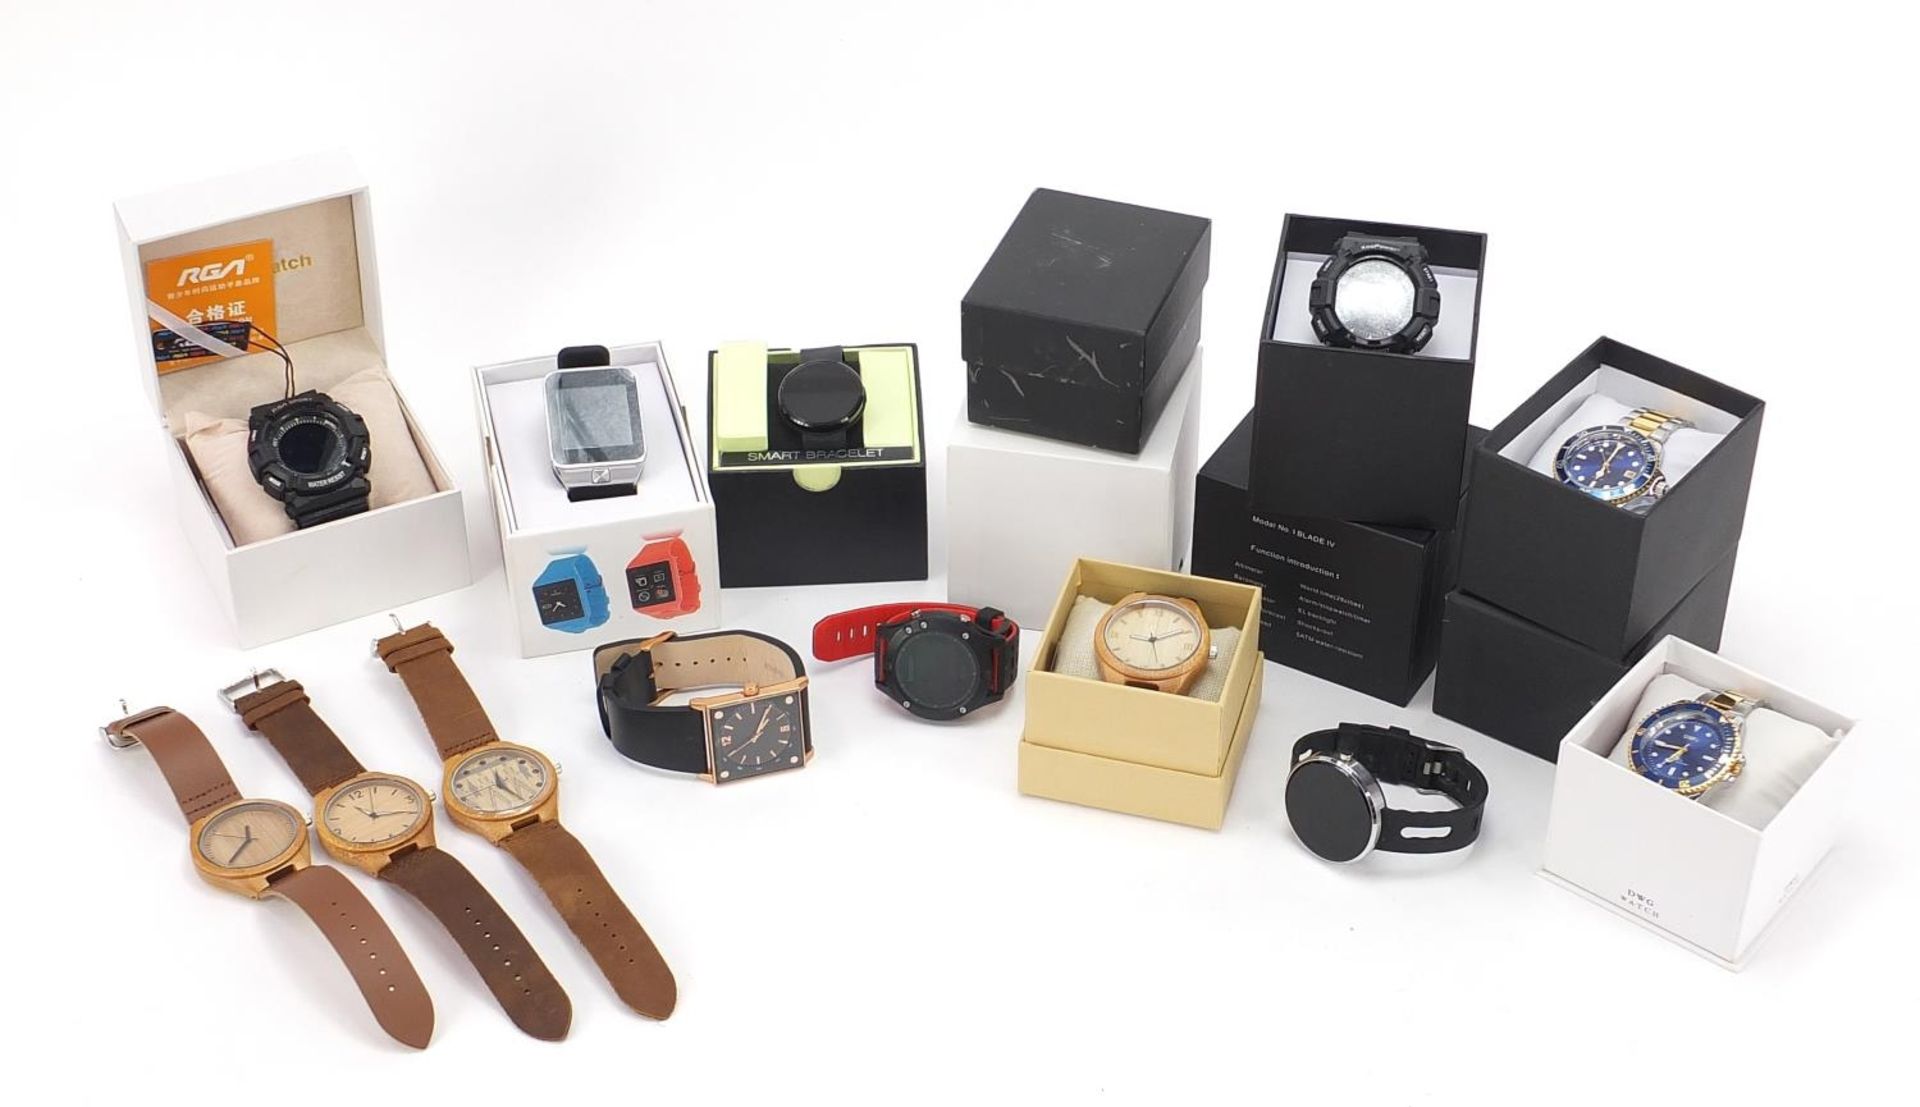 Thirteen gentlemen's wristwatches with boxes including android smart watch, DWG, Songdu, RGA